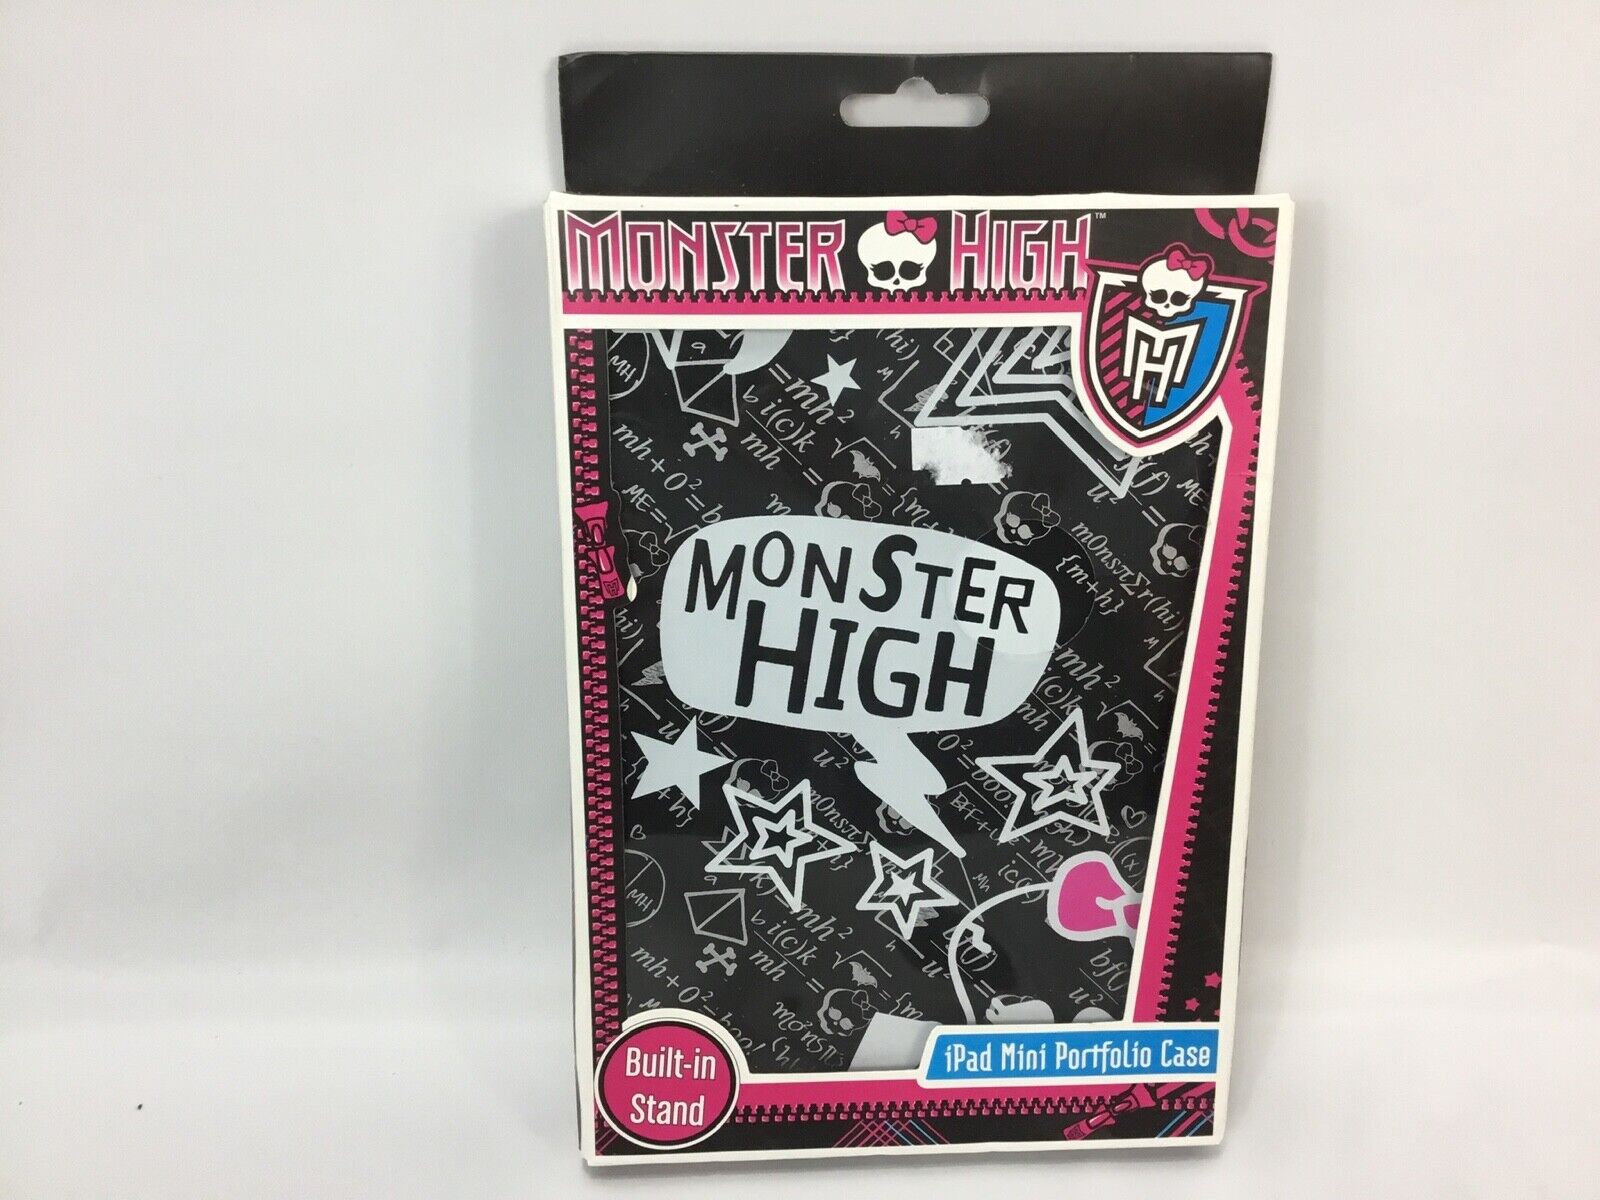  Monster High iPad Mini Portfolio Case NEW IN PACKAGE Dared 2014